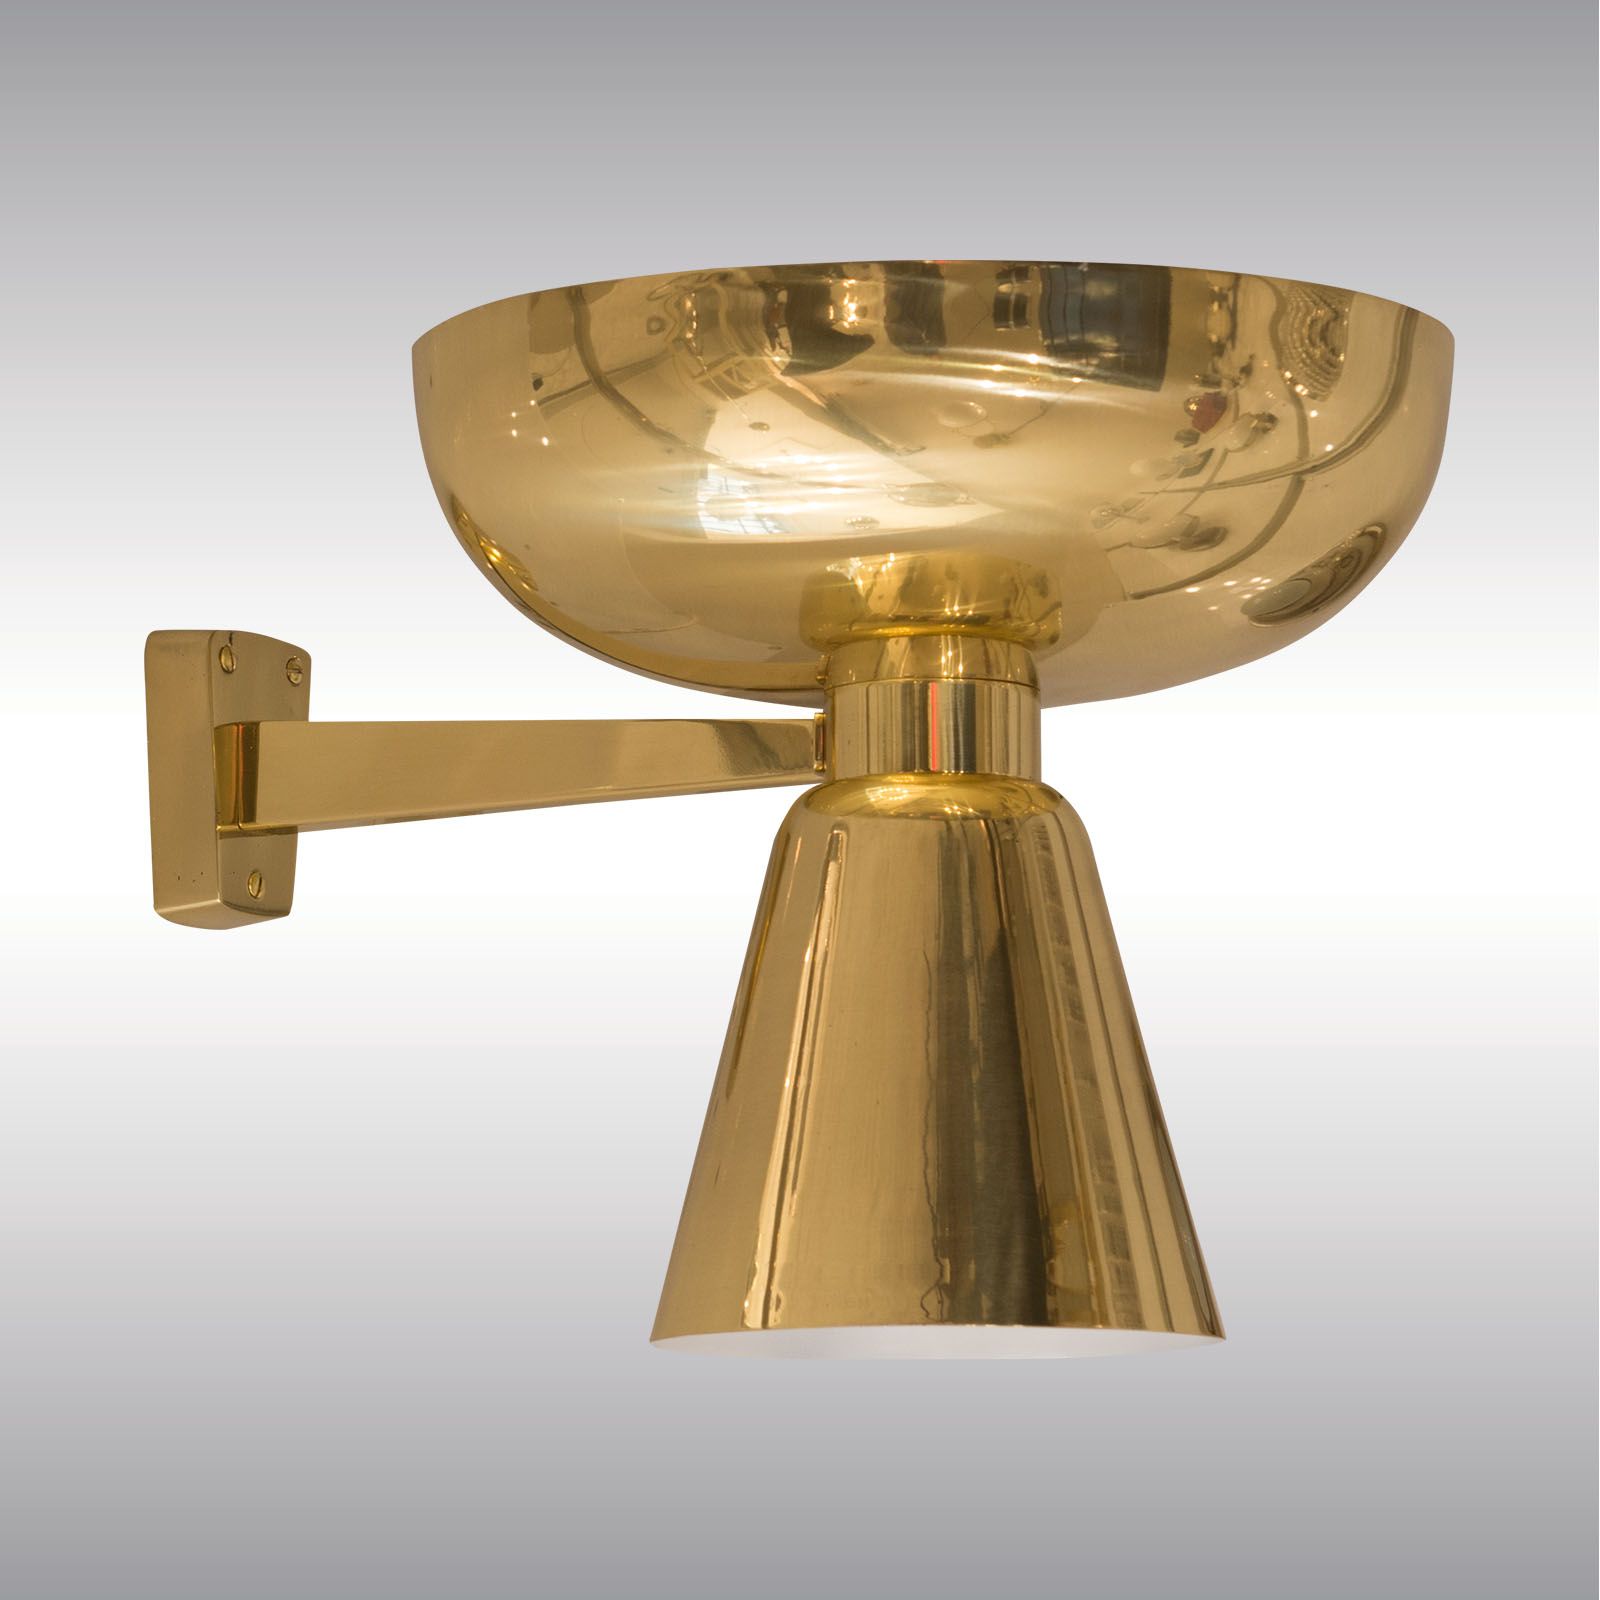 WOKA LAMPS VIENNA - OrderNr.: 21728|Stanizl - Design: ArtDeco